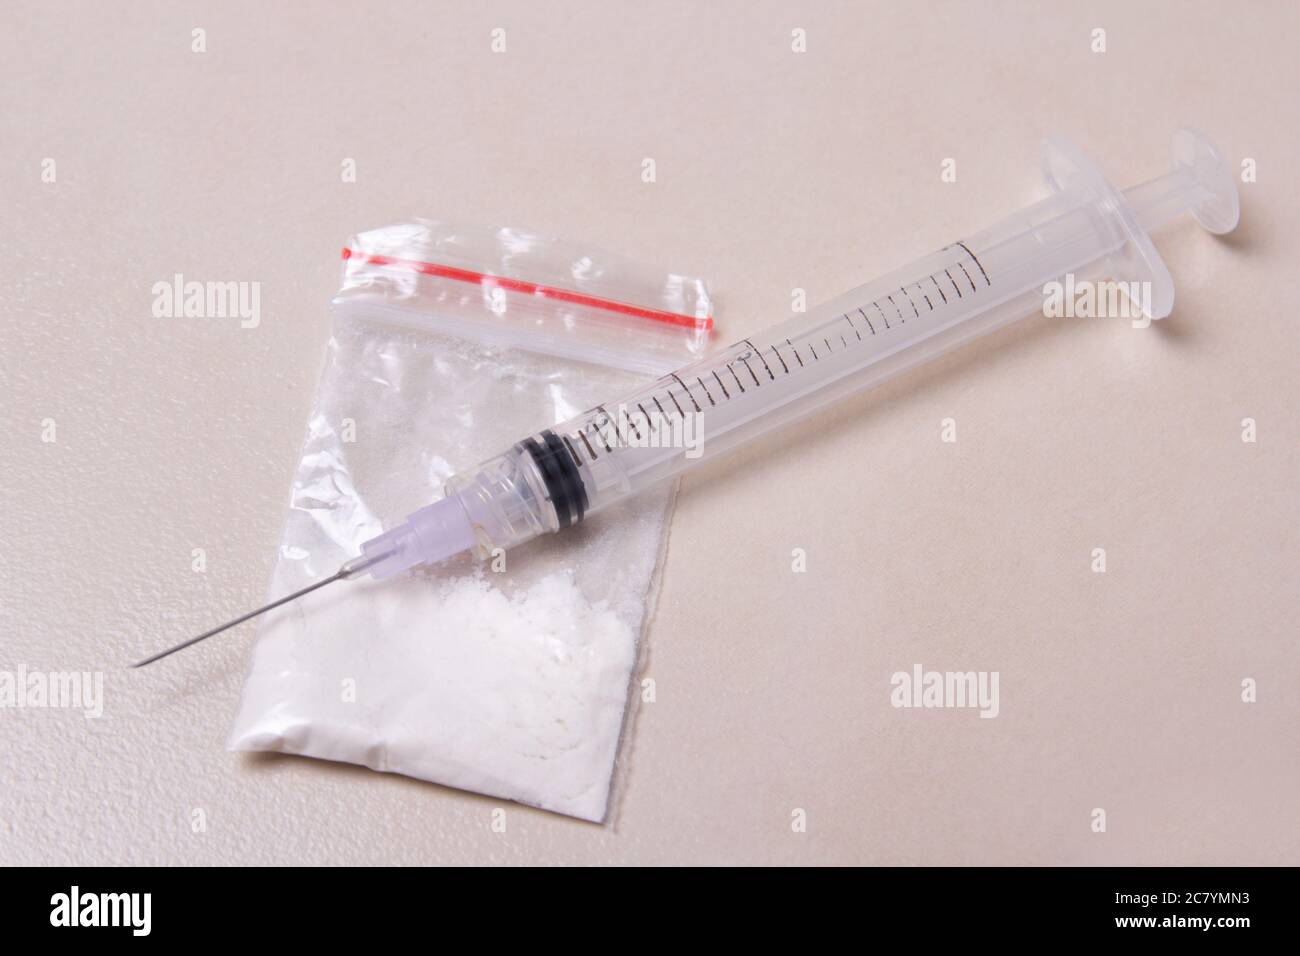 drug syringe and heroin powder in pack on tiled floor Stock Photo